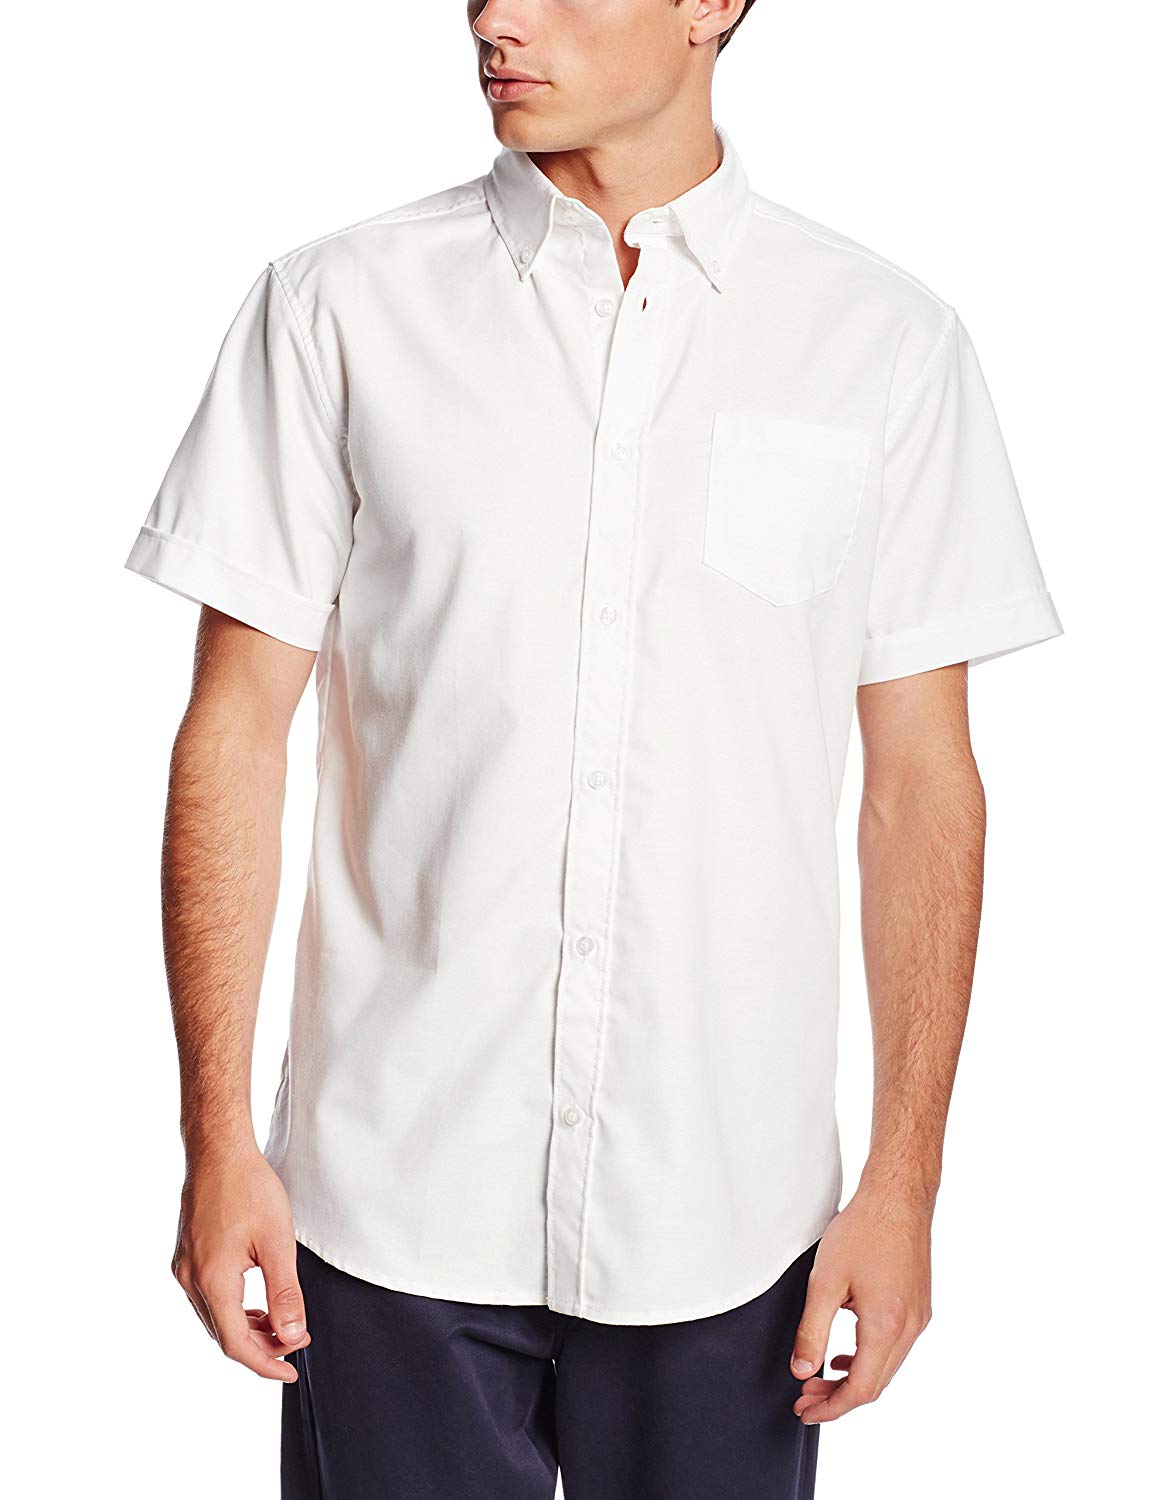 Lee Uniforms Men's Short Sleeve Oxford Shirt, White, Large, White, Size ...